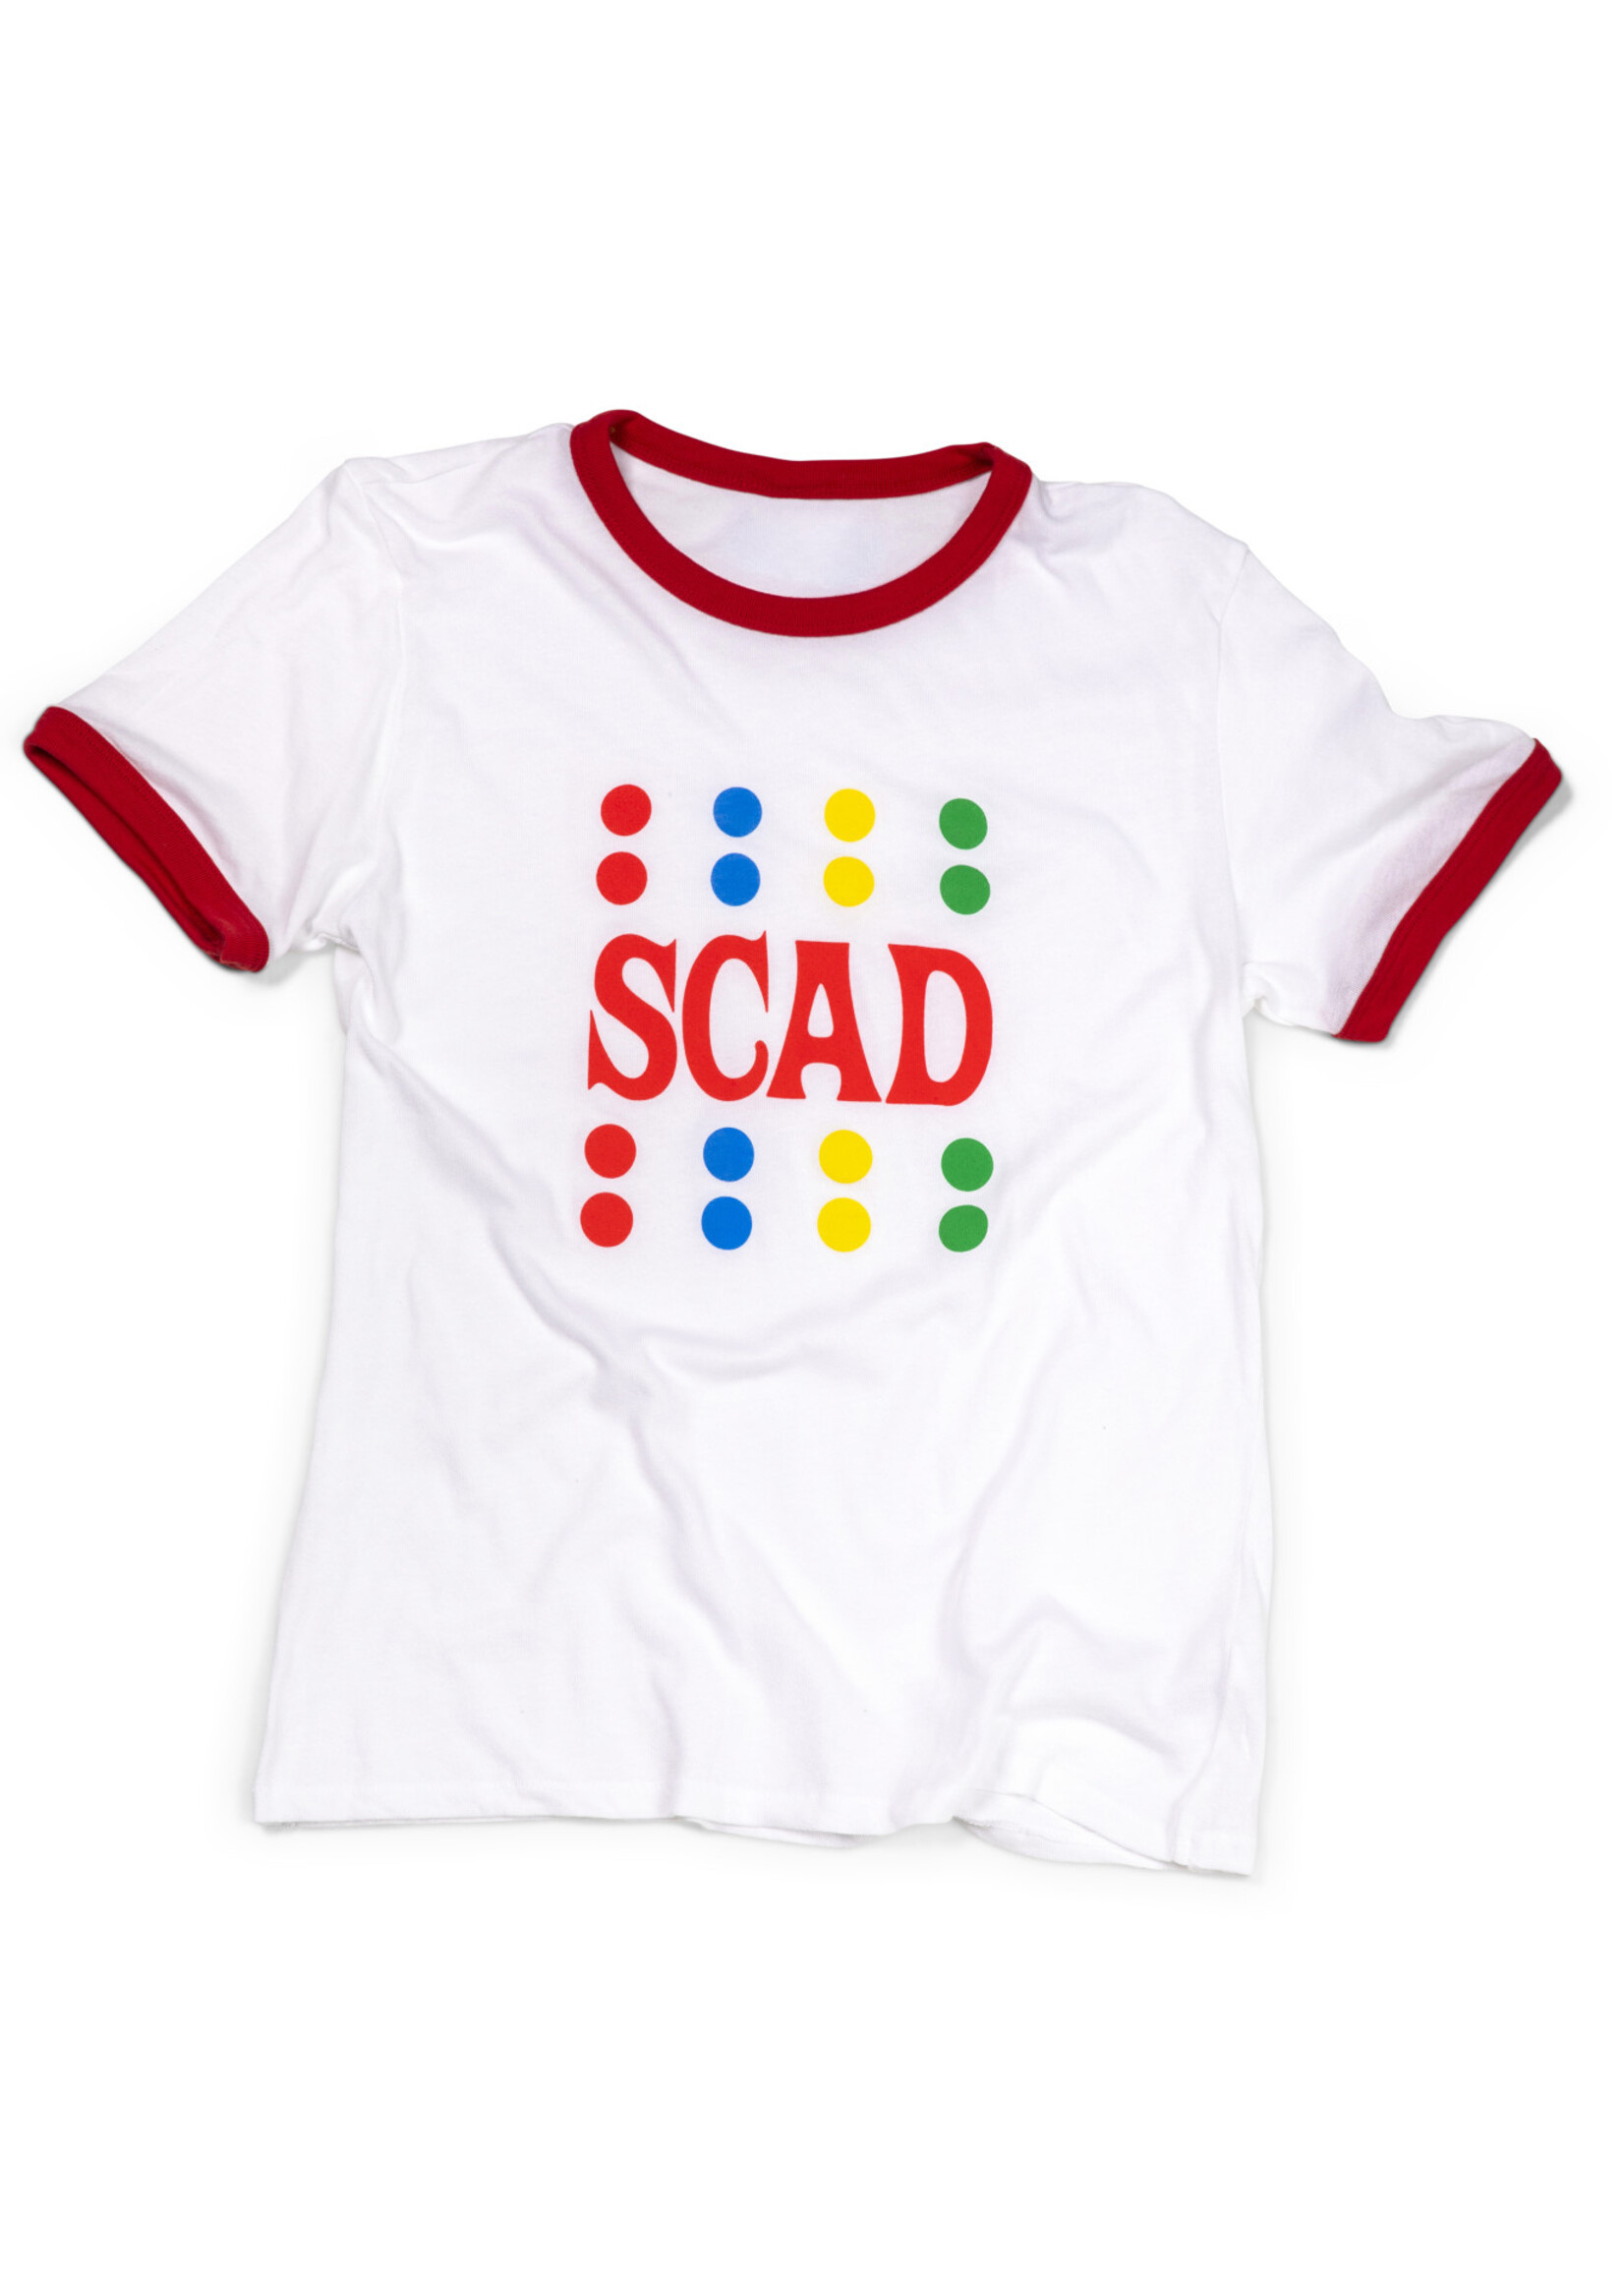 SCAD SCAD Twister T-shirt XXL